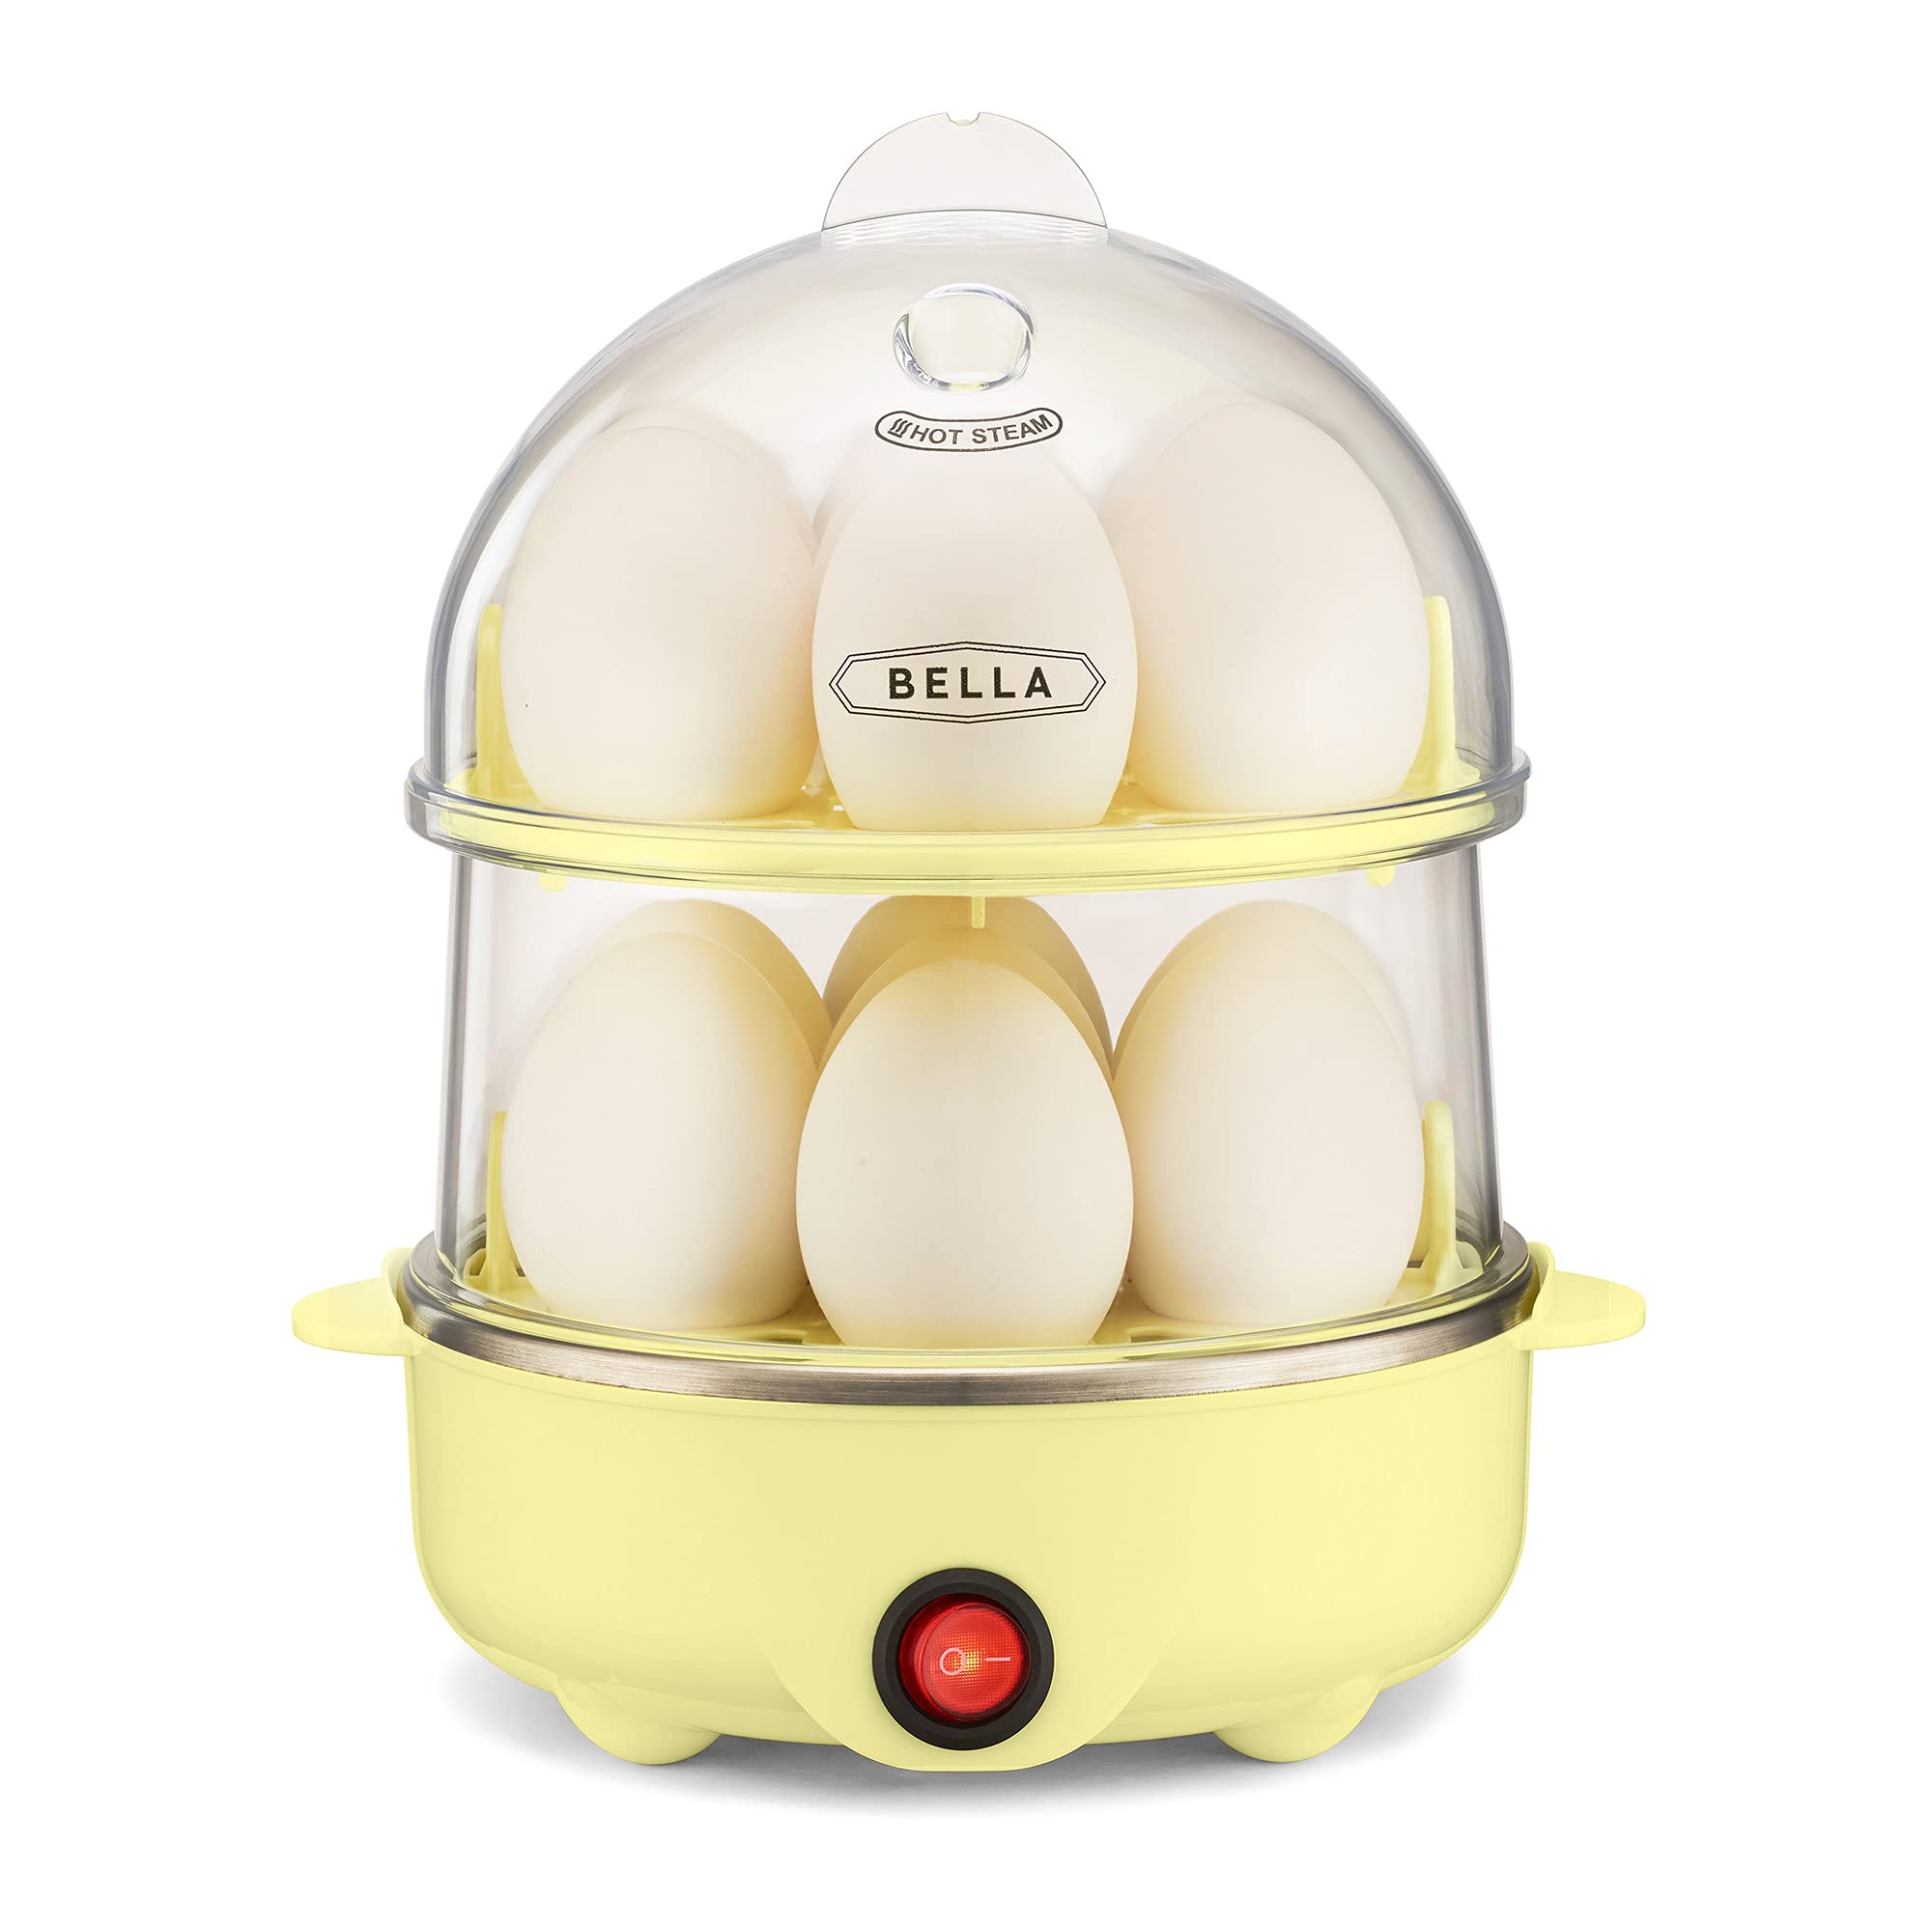 BELLA Rapid Electric Egg Cooker and Poacher (yellow) - 14 Egg Capacity - $9.54 AC - Amazon